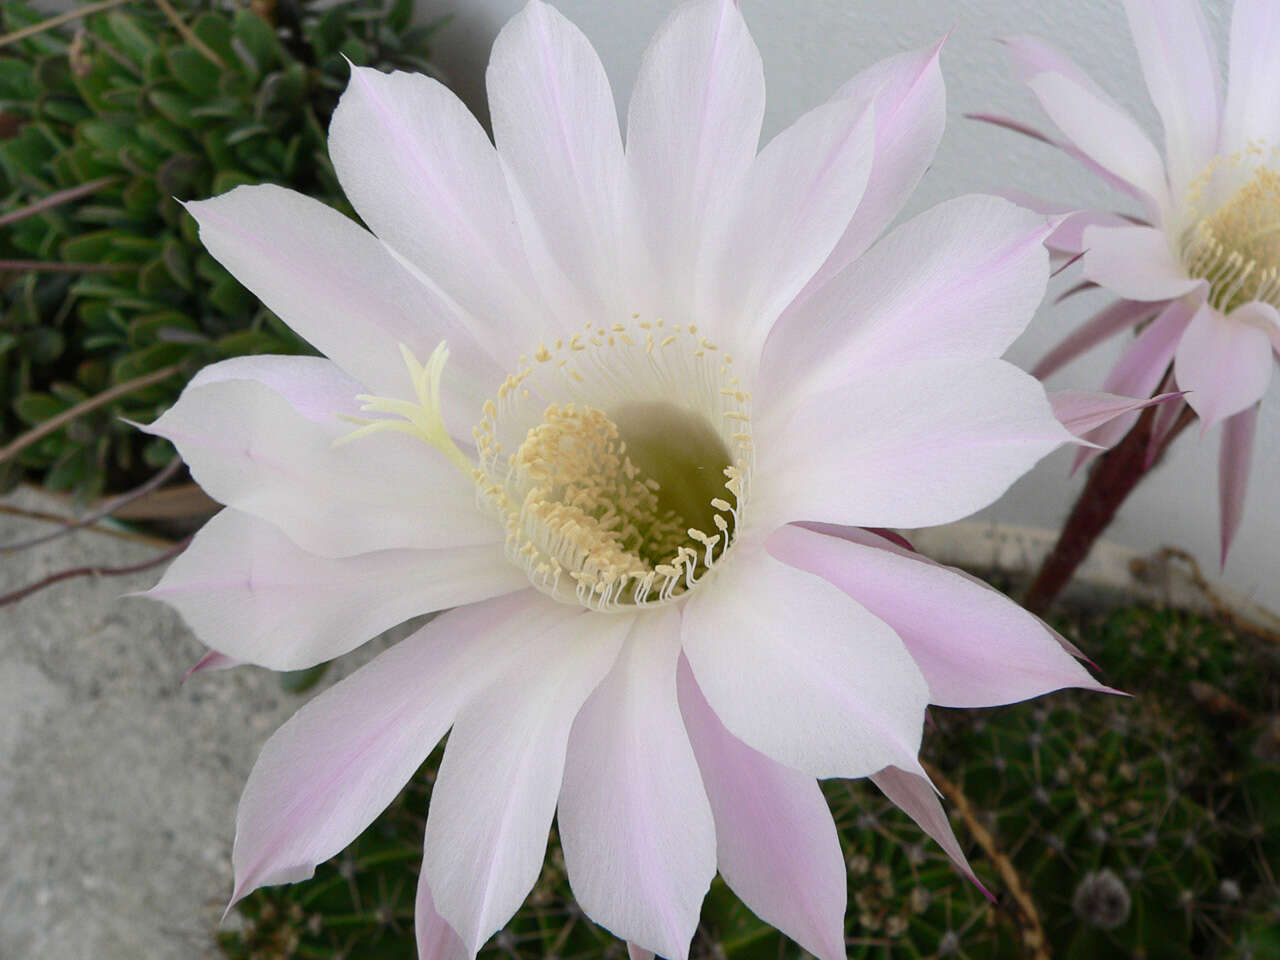 Image de Echinopsis oxygona